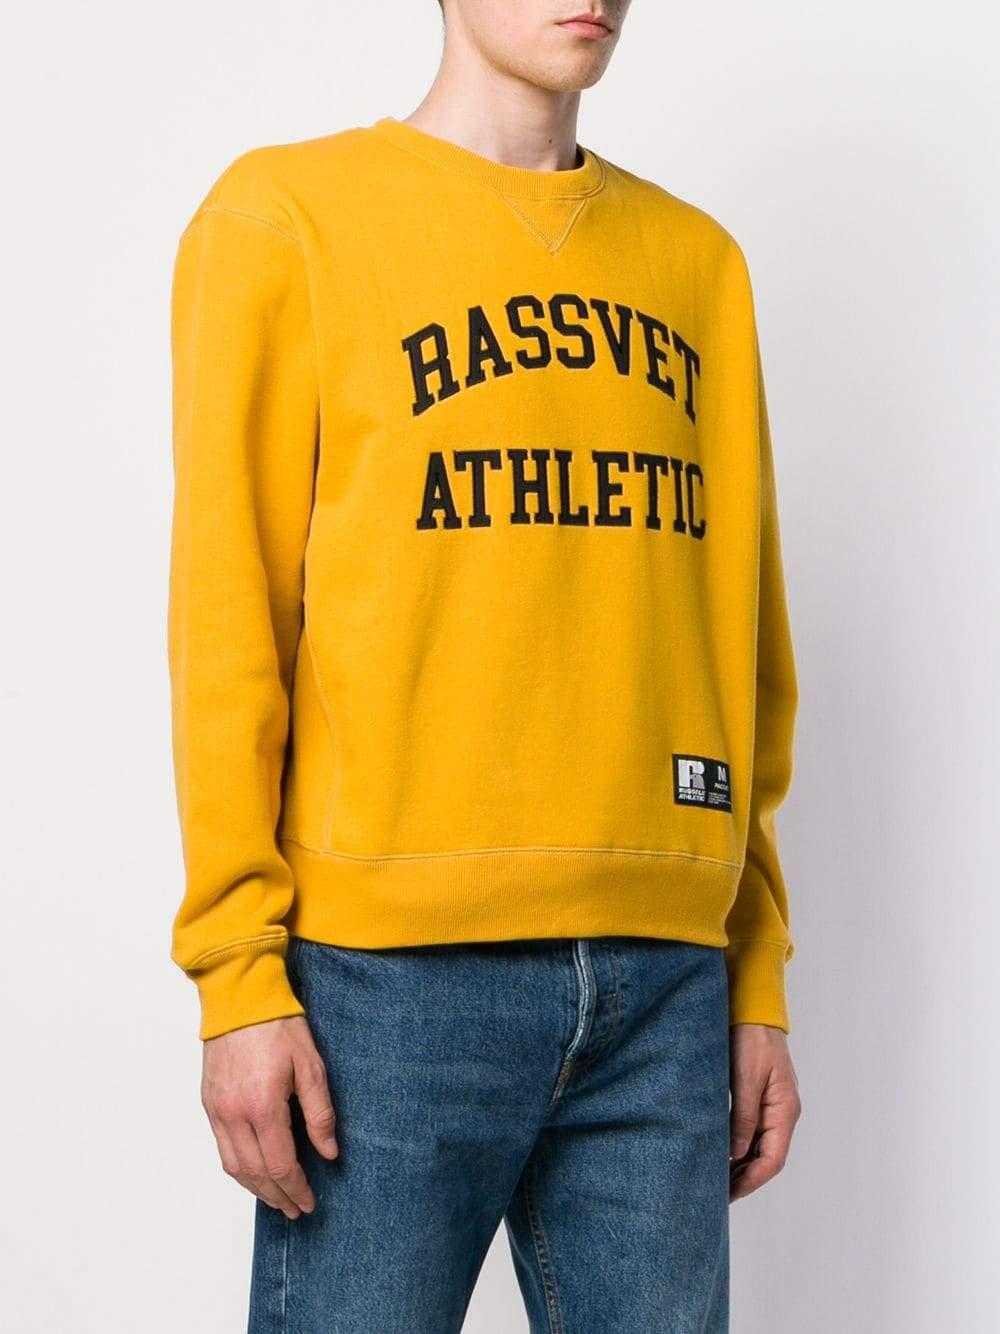 Gosha Rubchinskiy Cotton Paccbet Rassvet X Russell Athletic Logo Sweatshirt  in Yellow for Men - Lyst